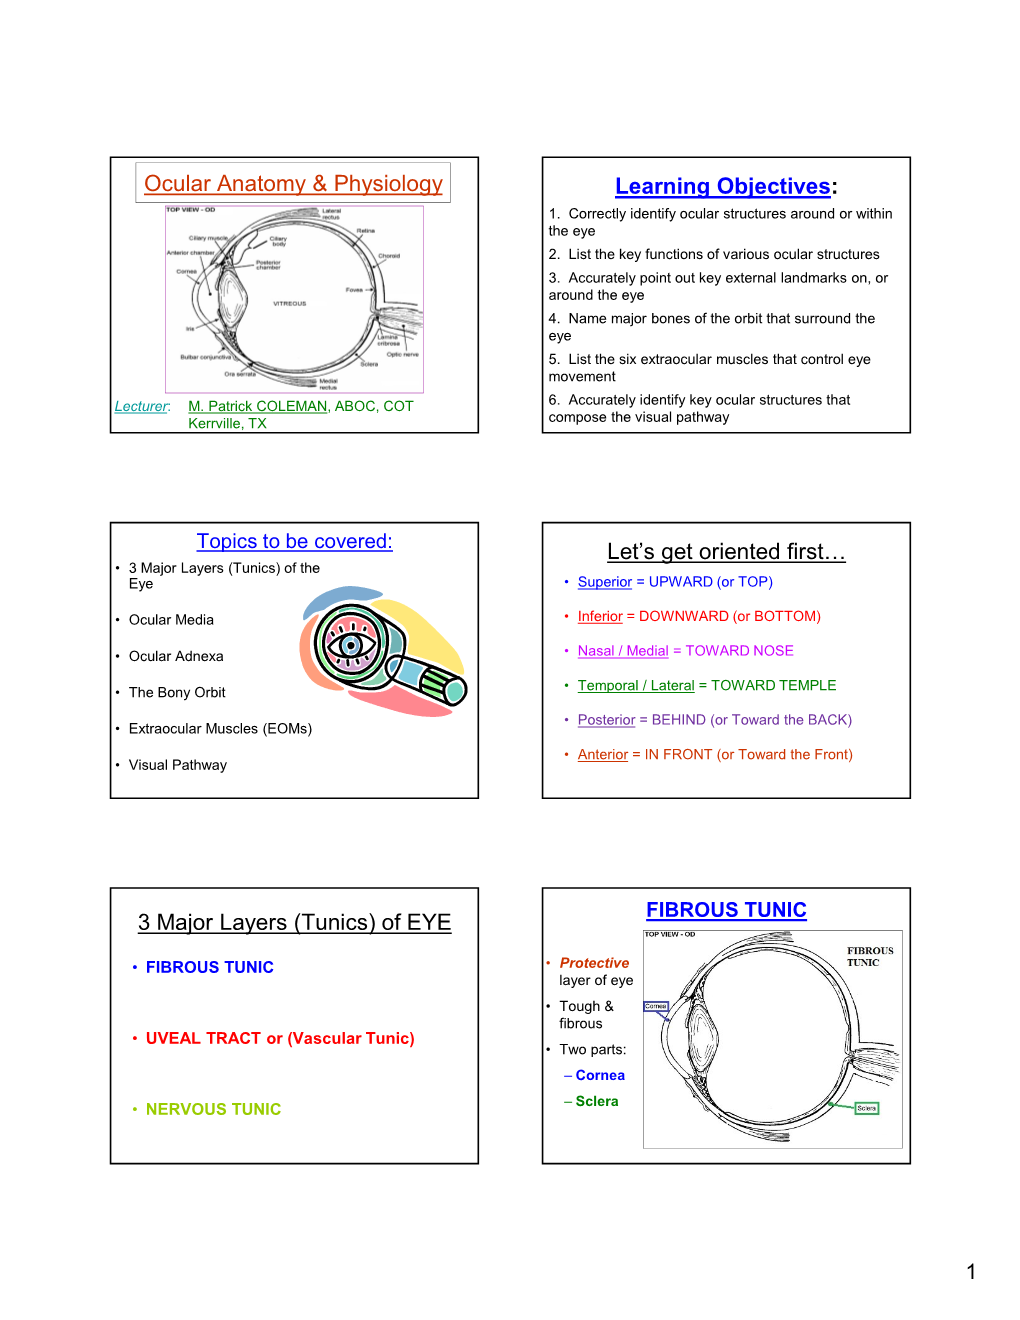 Ocular Anatomy & Physiology Learning Objectives